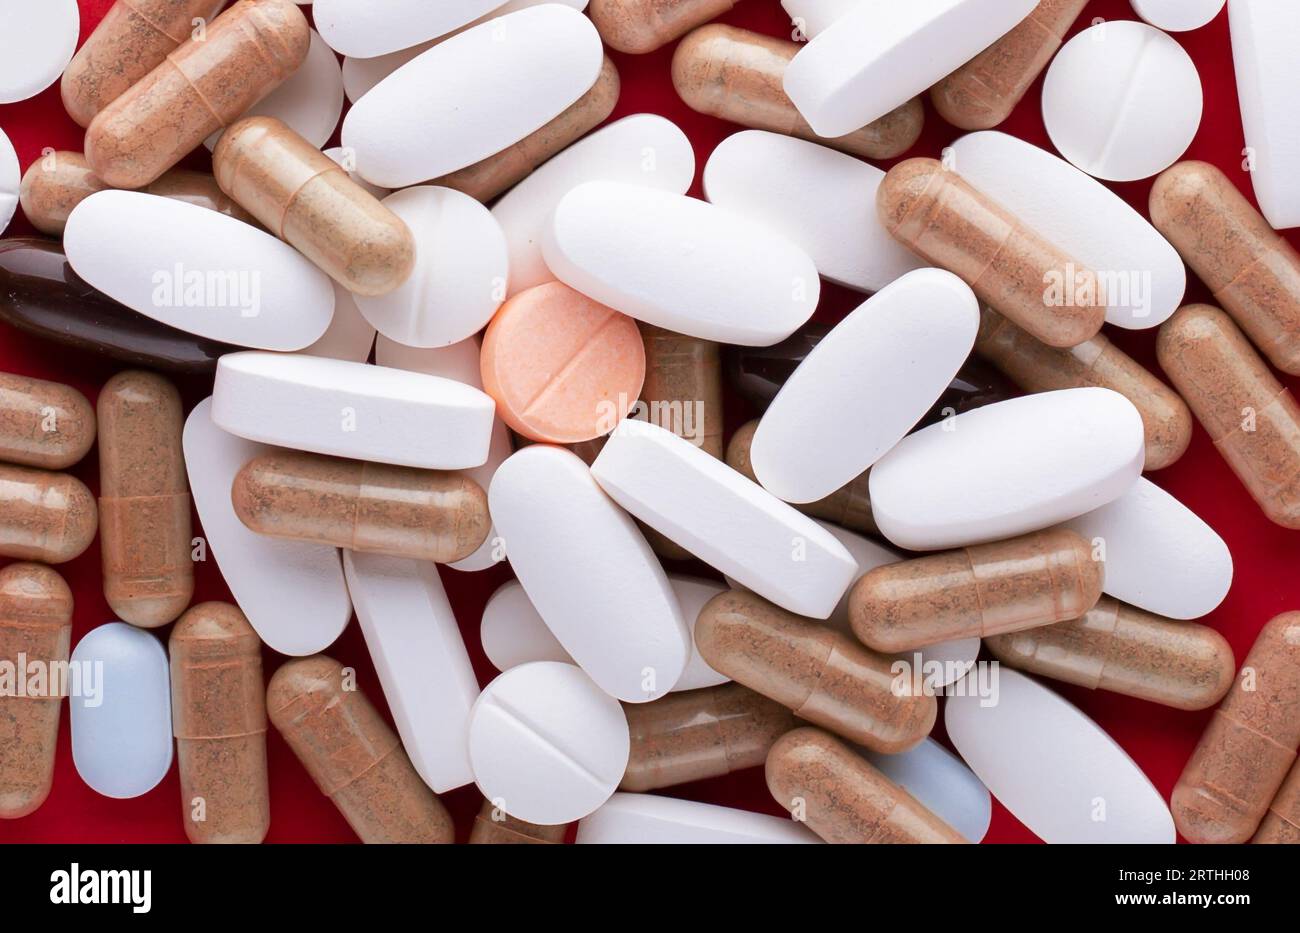 Verschiedene Medizin Drogen, Pillen, Tabletten. pharmazeutische Medizin Pillen Stockfoto